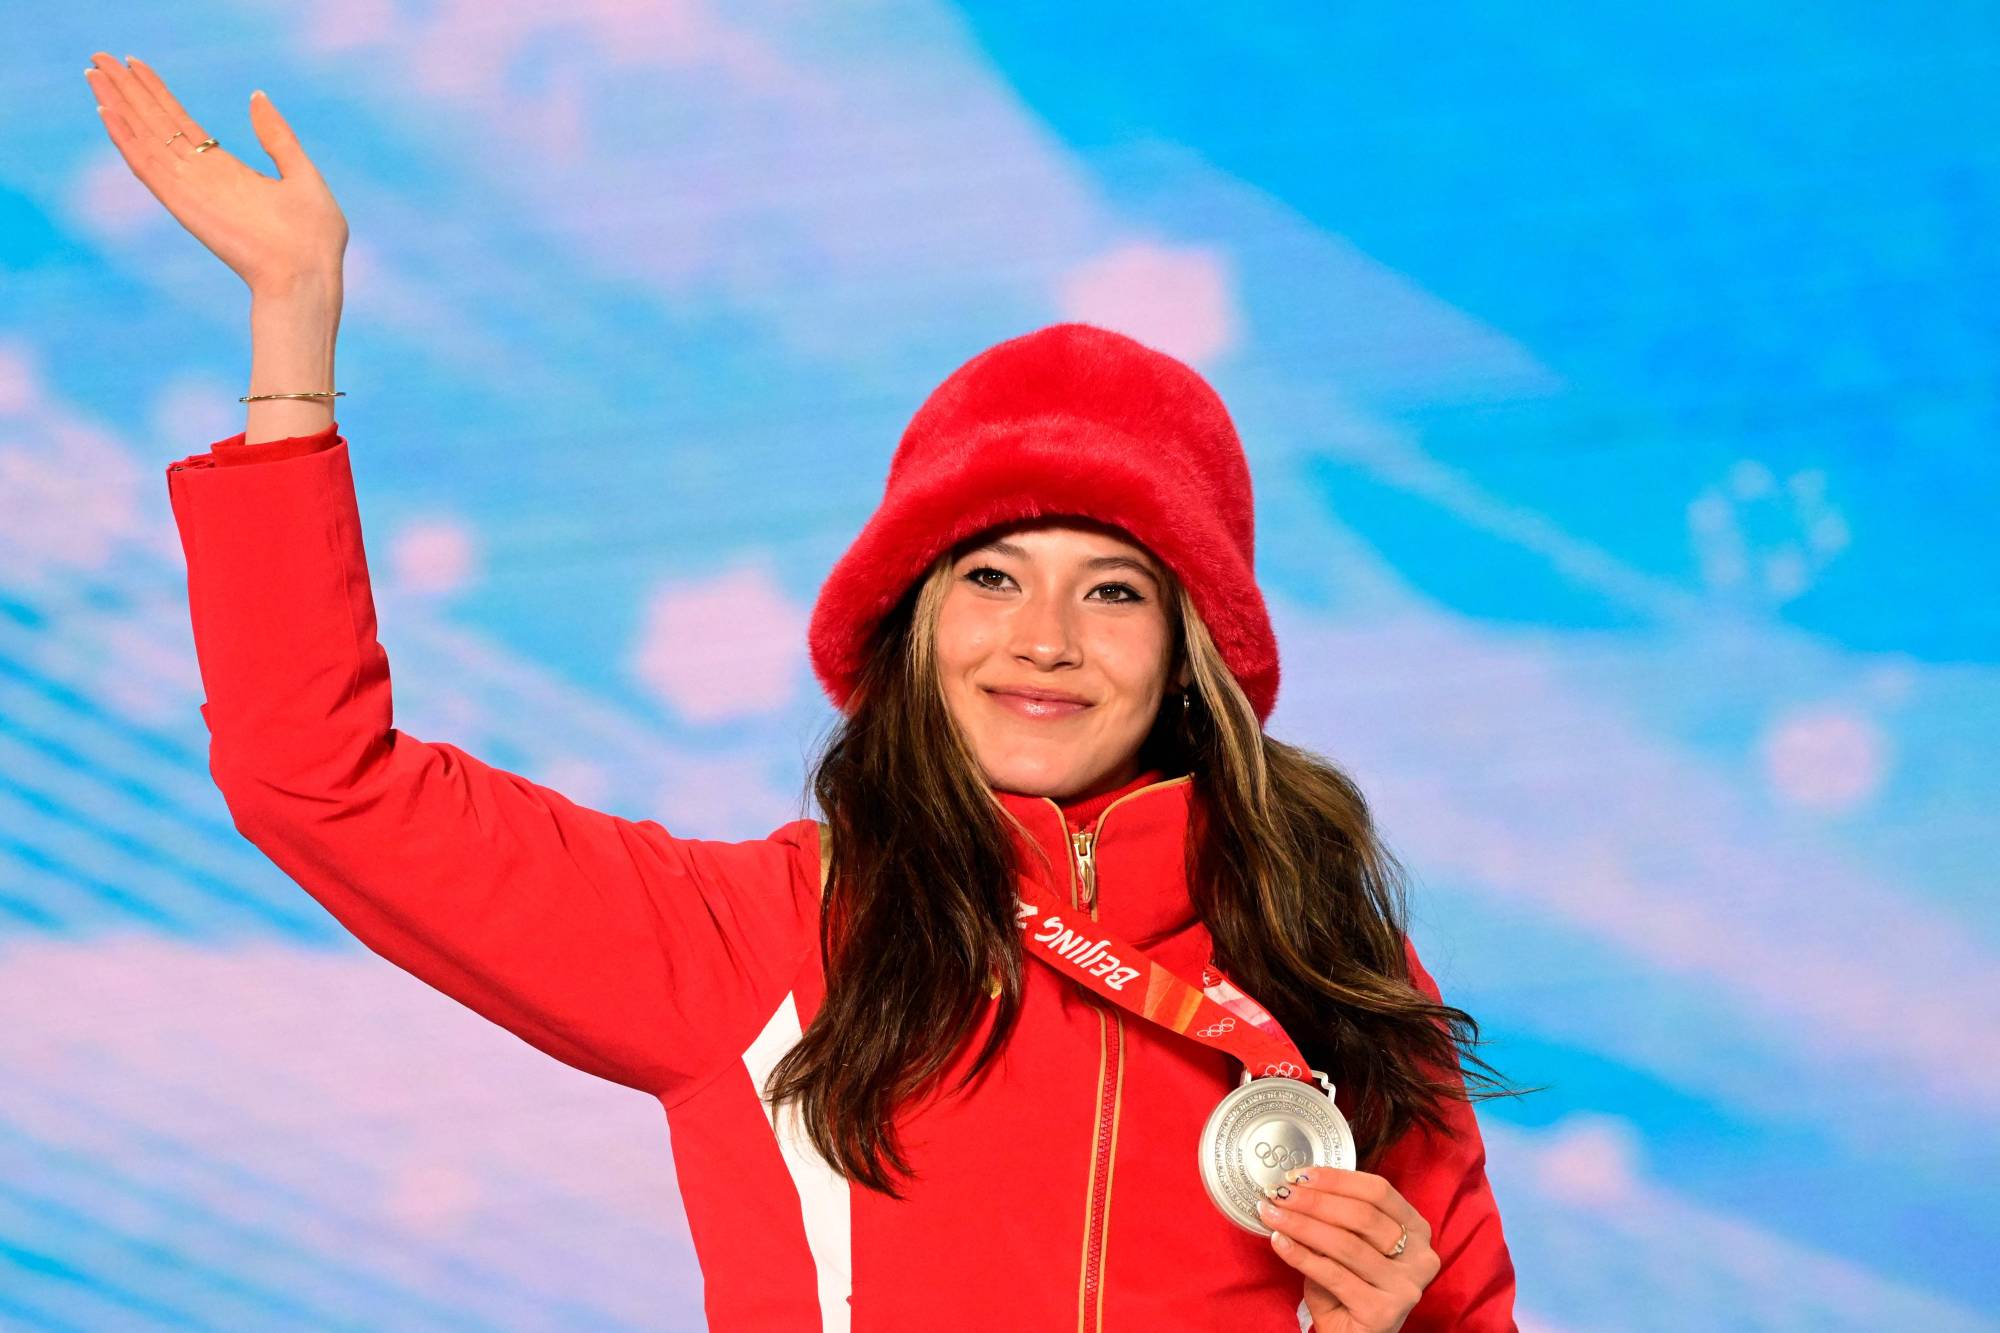 Beijing Winter Olympics 2022: Eileen Gu has captivated China, yet